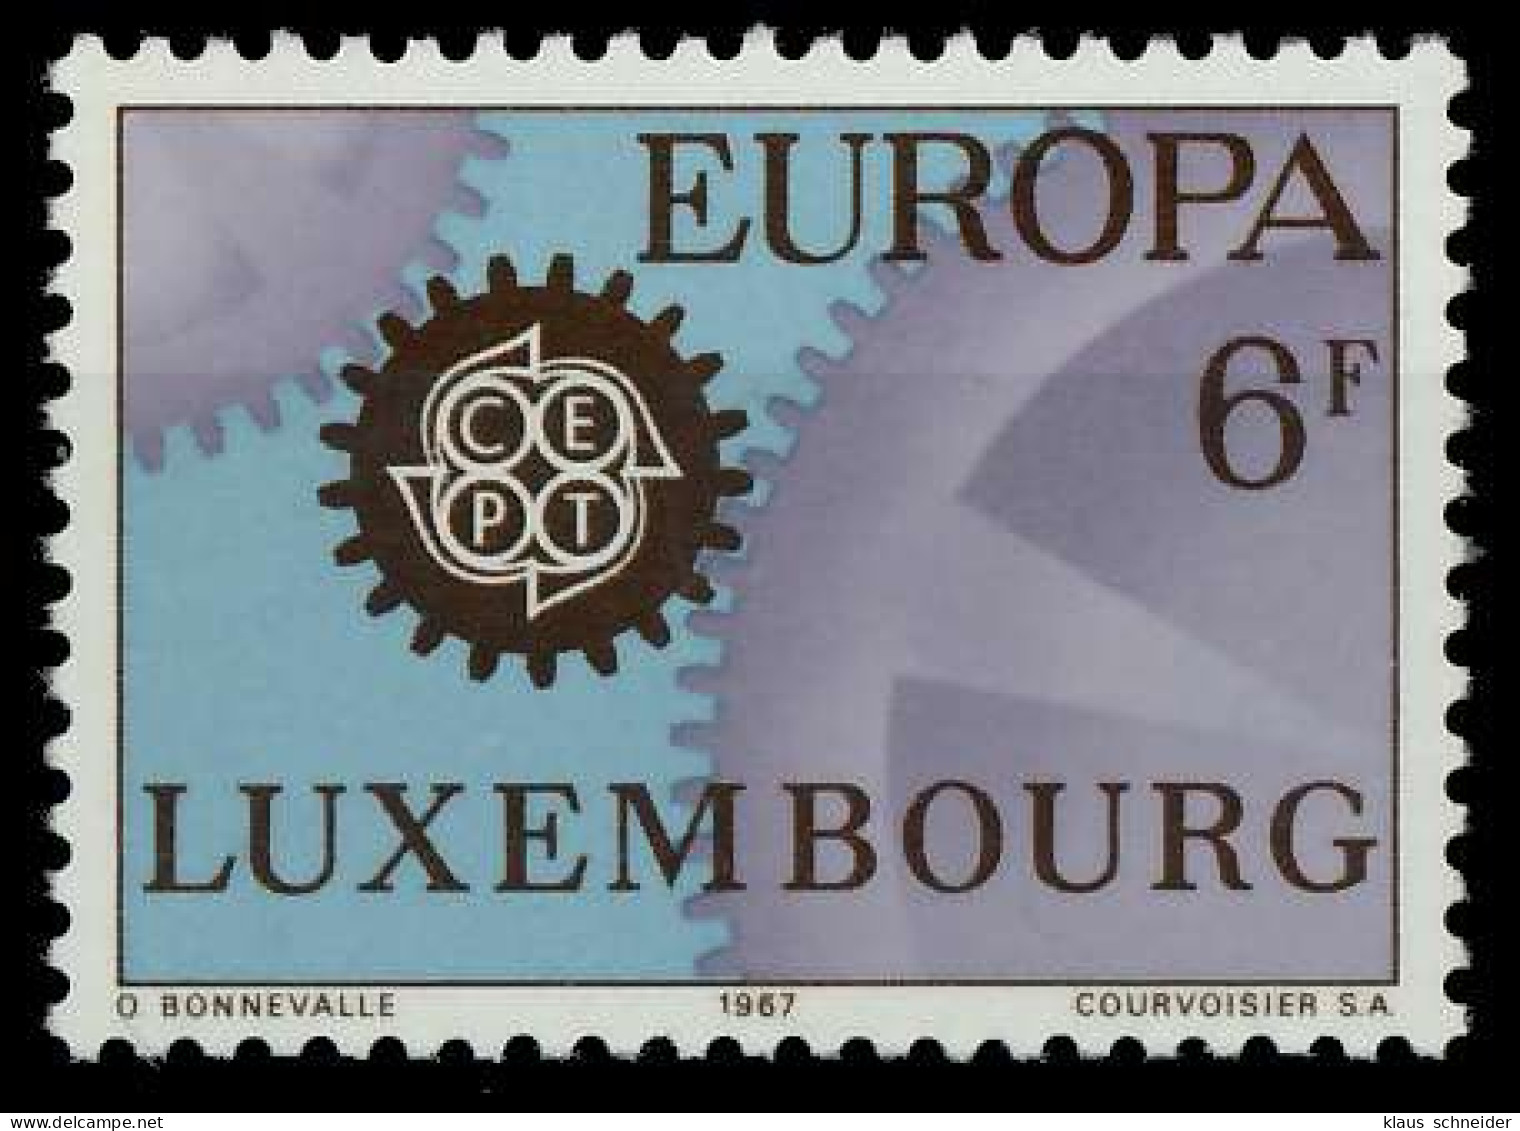 LUXEMBURG 1967 Nr 749 Postfrisch SA52B26 - Nuevos